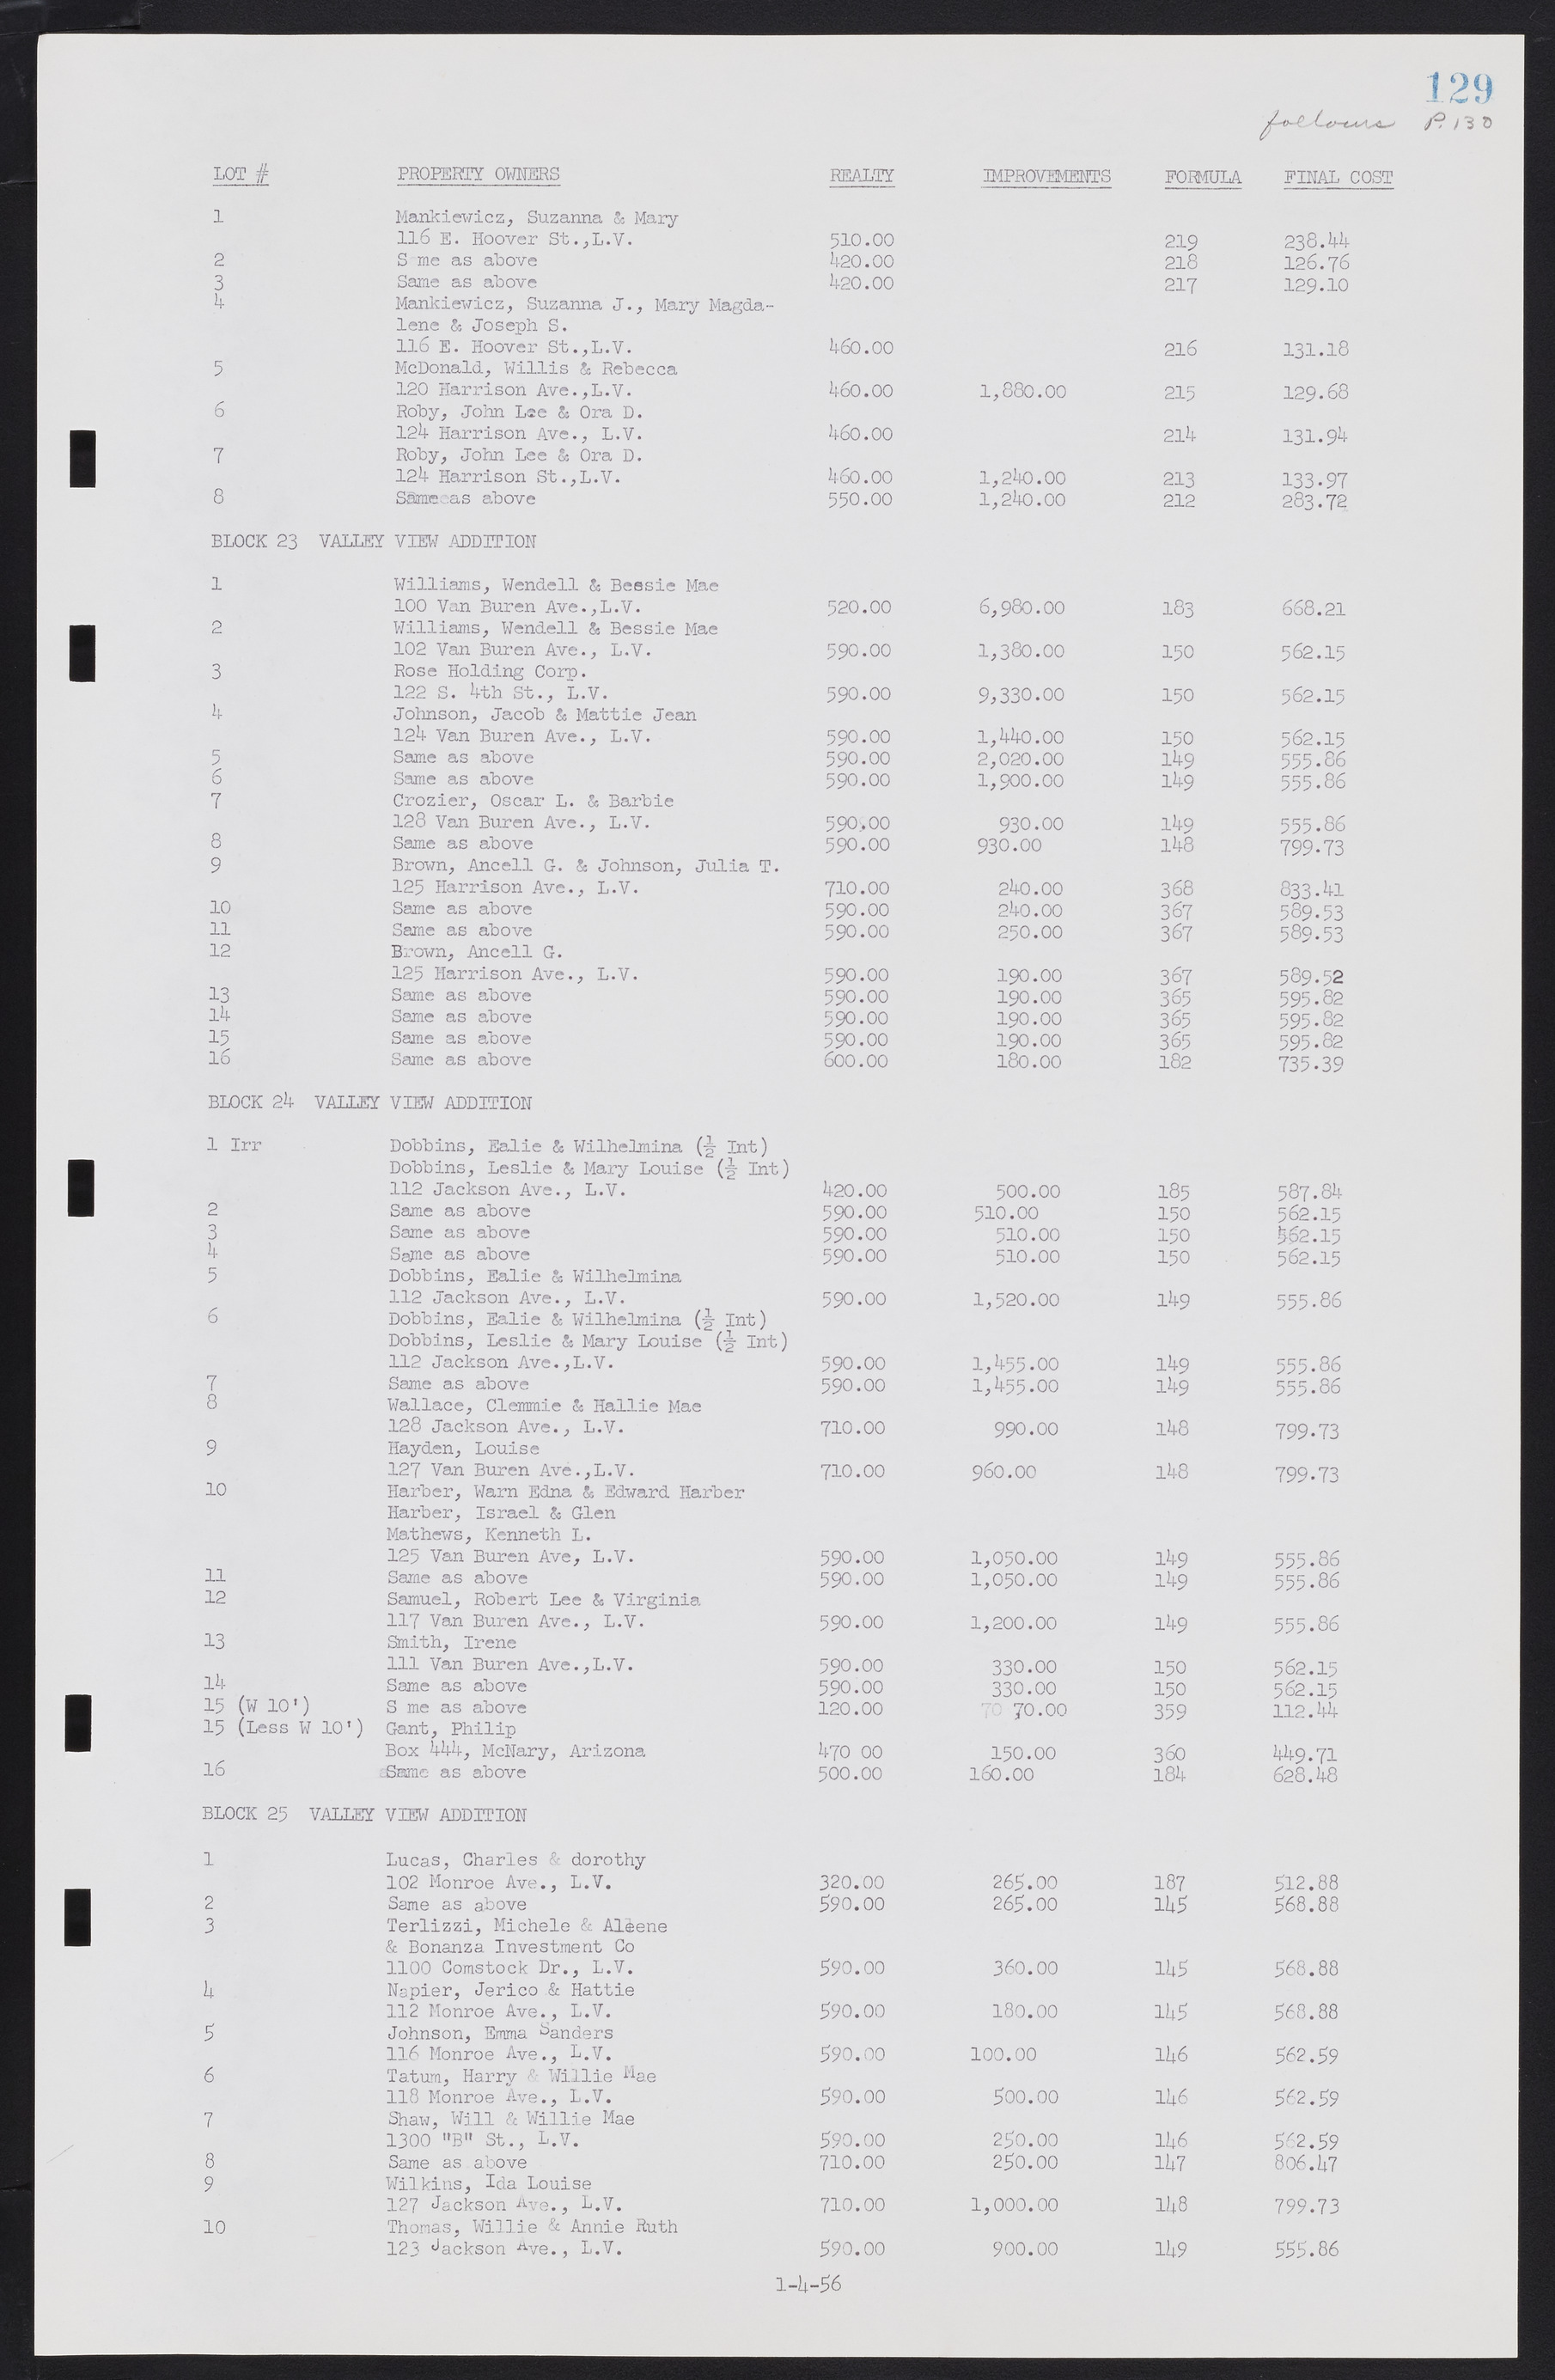 Las Vegas City Commission Minutes, September 21, 1955 to November 20, 1957, lvc000010-139